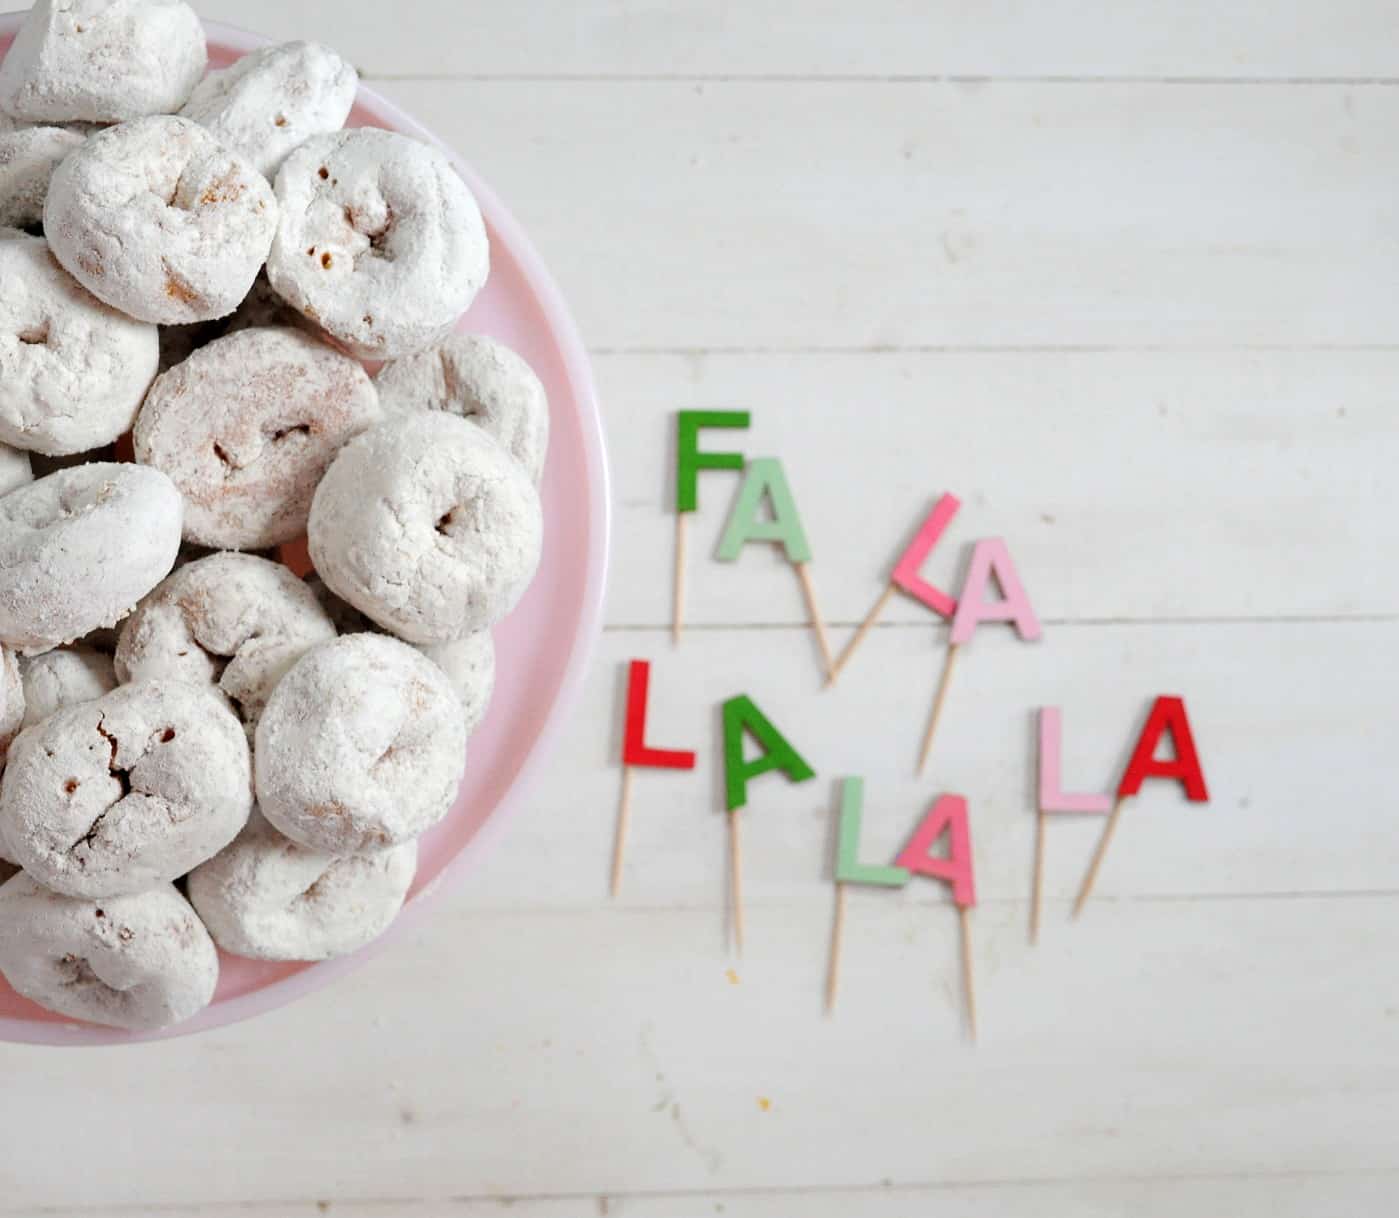 Christmas cake topper that says Fa la la la la next to a plate of white powdered donuts